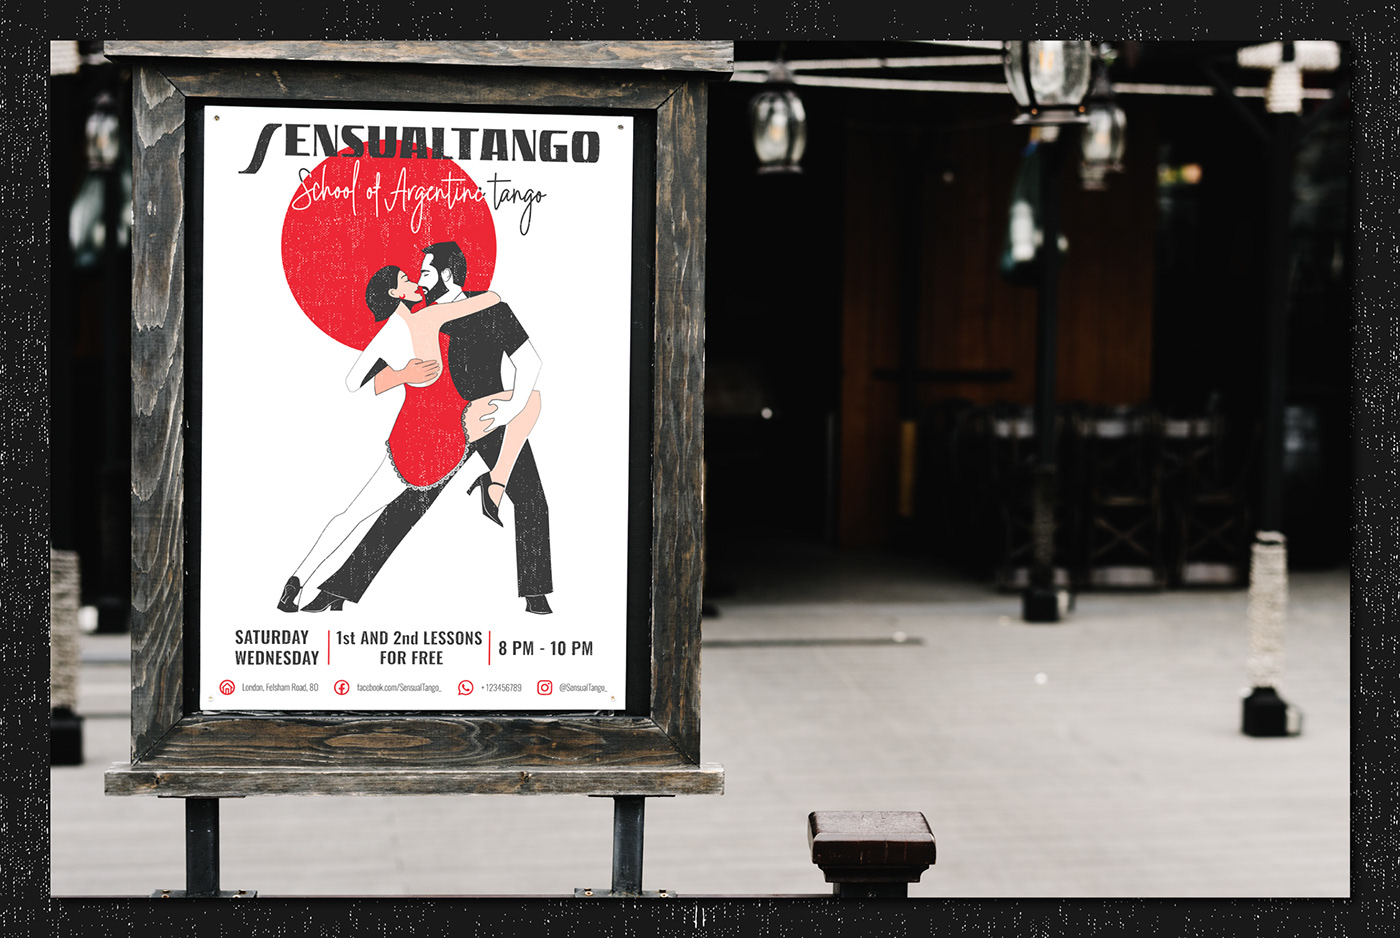 Poster Design Retro retro style argentine tango tango 60s 70s vintage